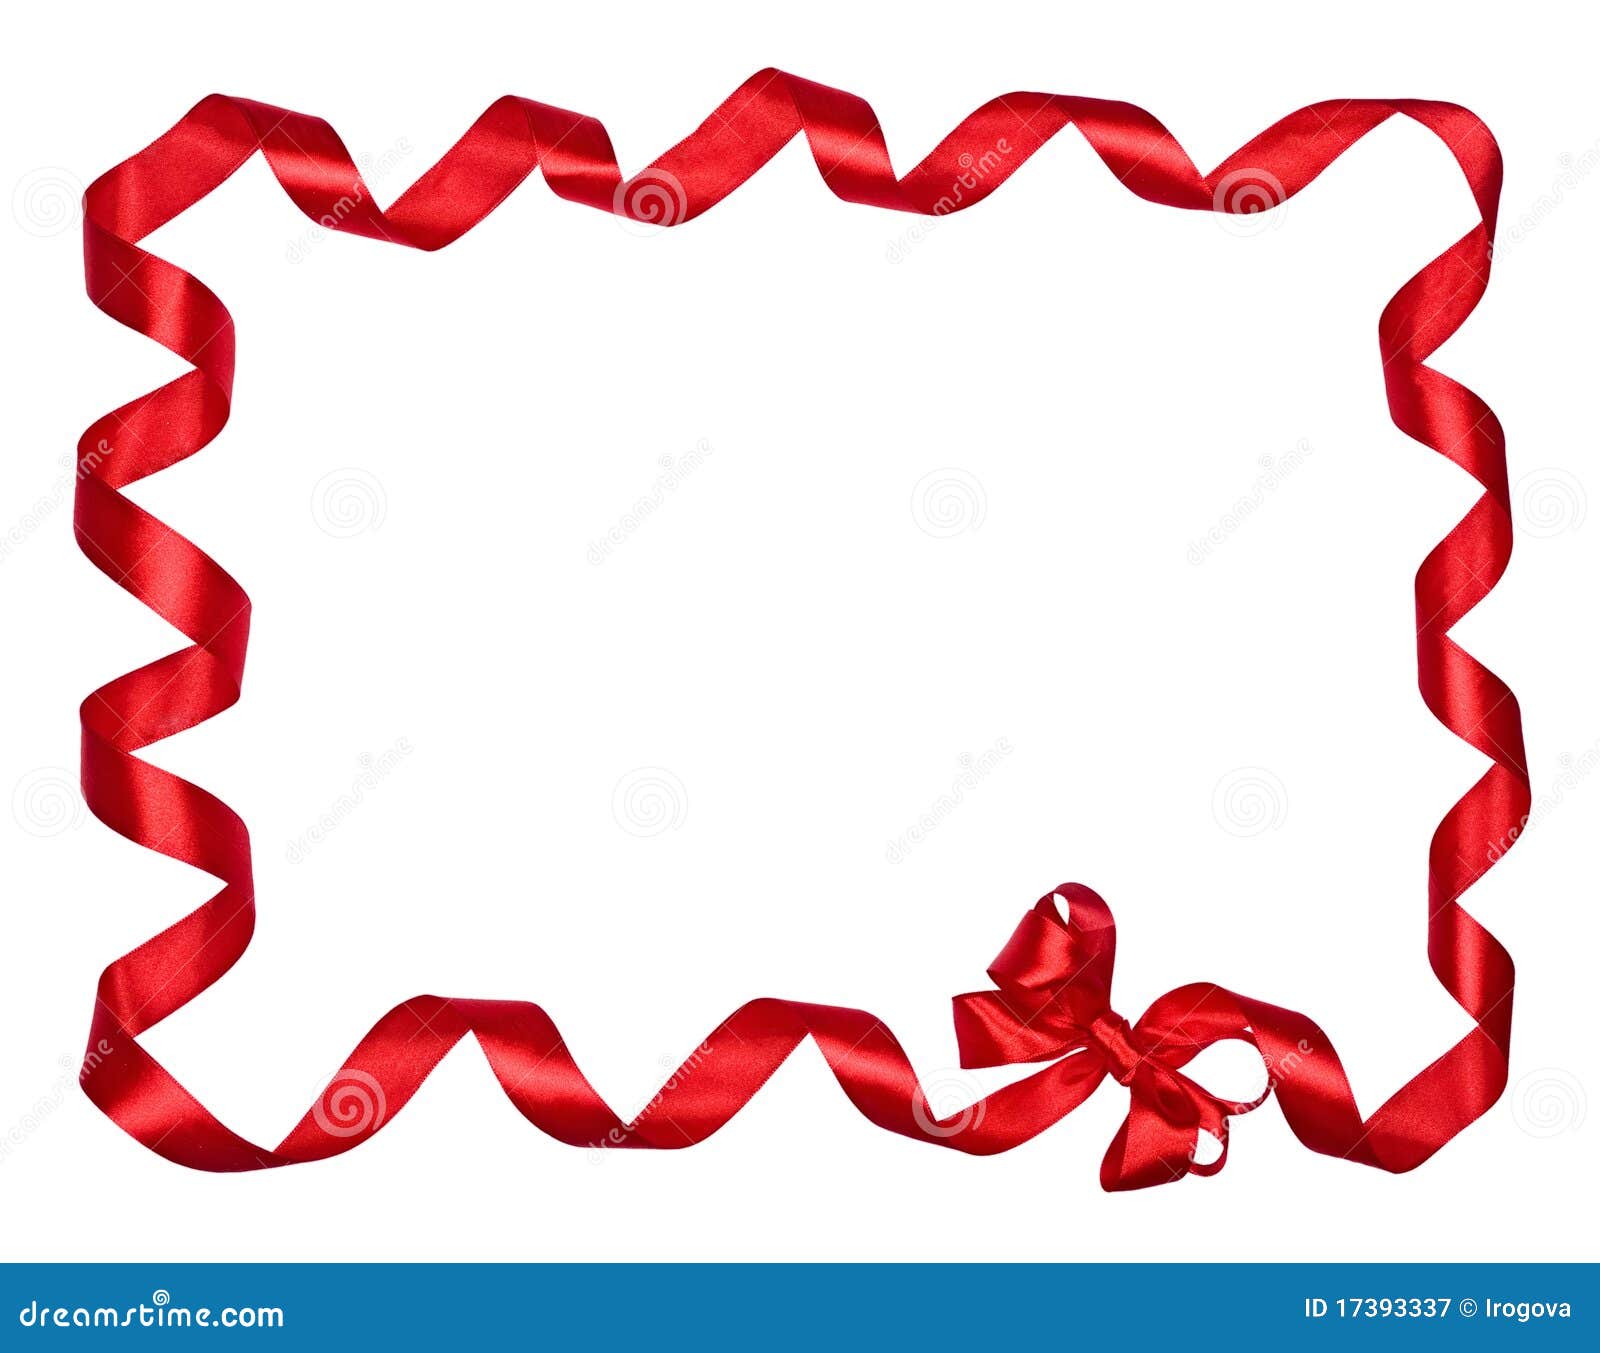 free clip art ribbon borders - photo #9